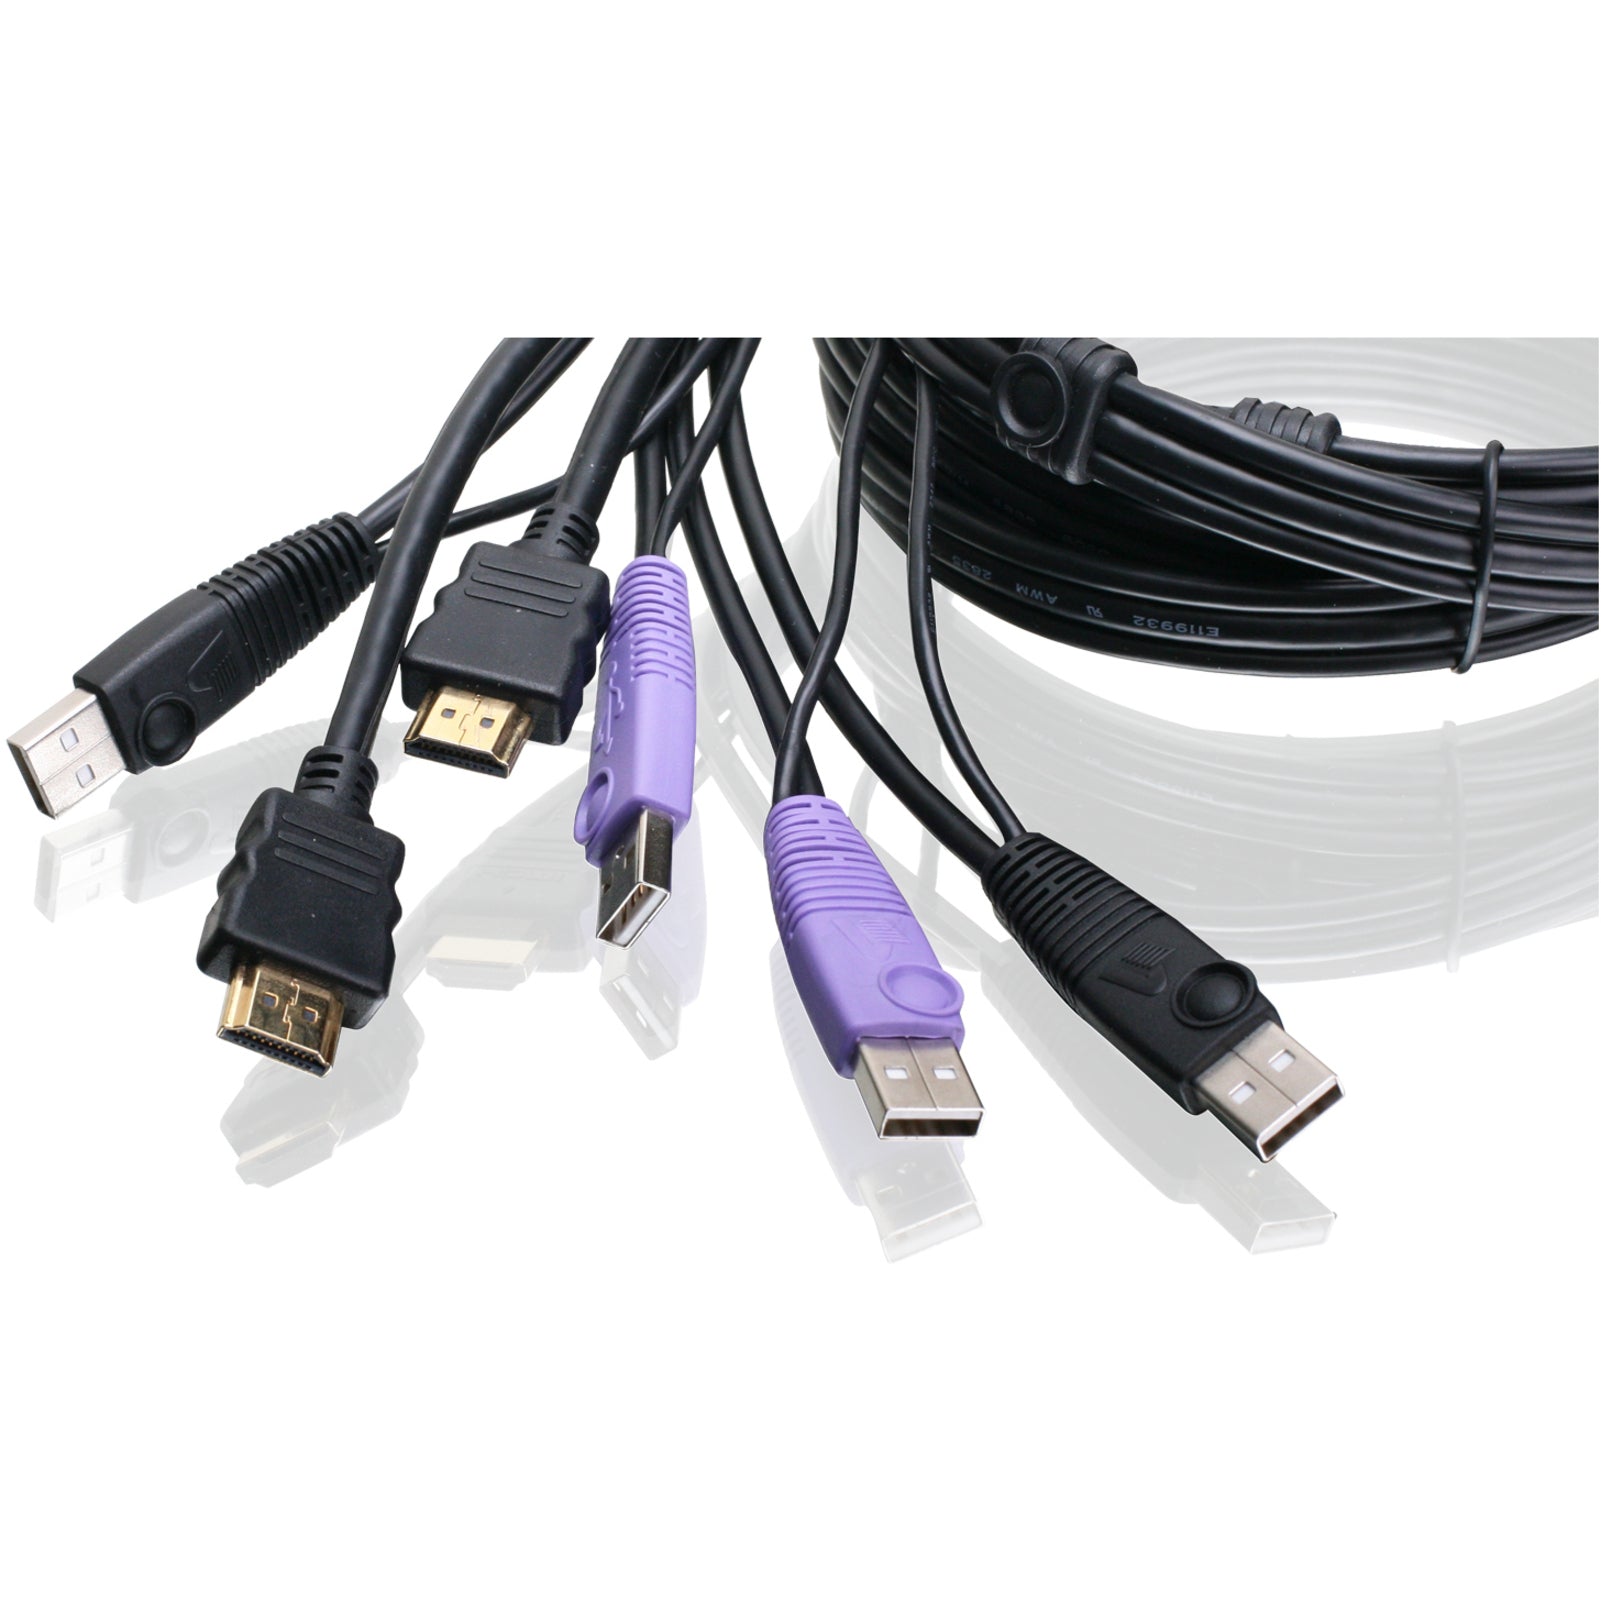 IOGEAR GCS62HU KVM Switch, USB HDMI 2-Port with 6 USB Ports, 3 HDMI Ports, 1920 x 1200 Resolution, 3-Year Warranty